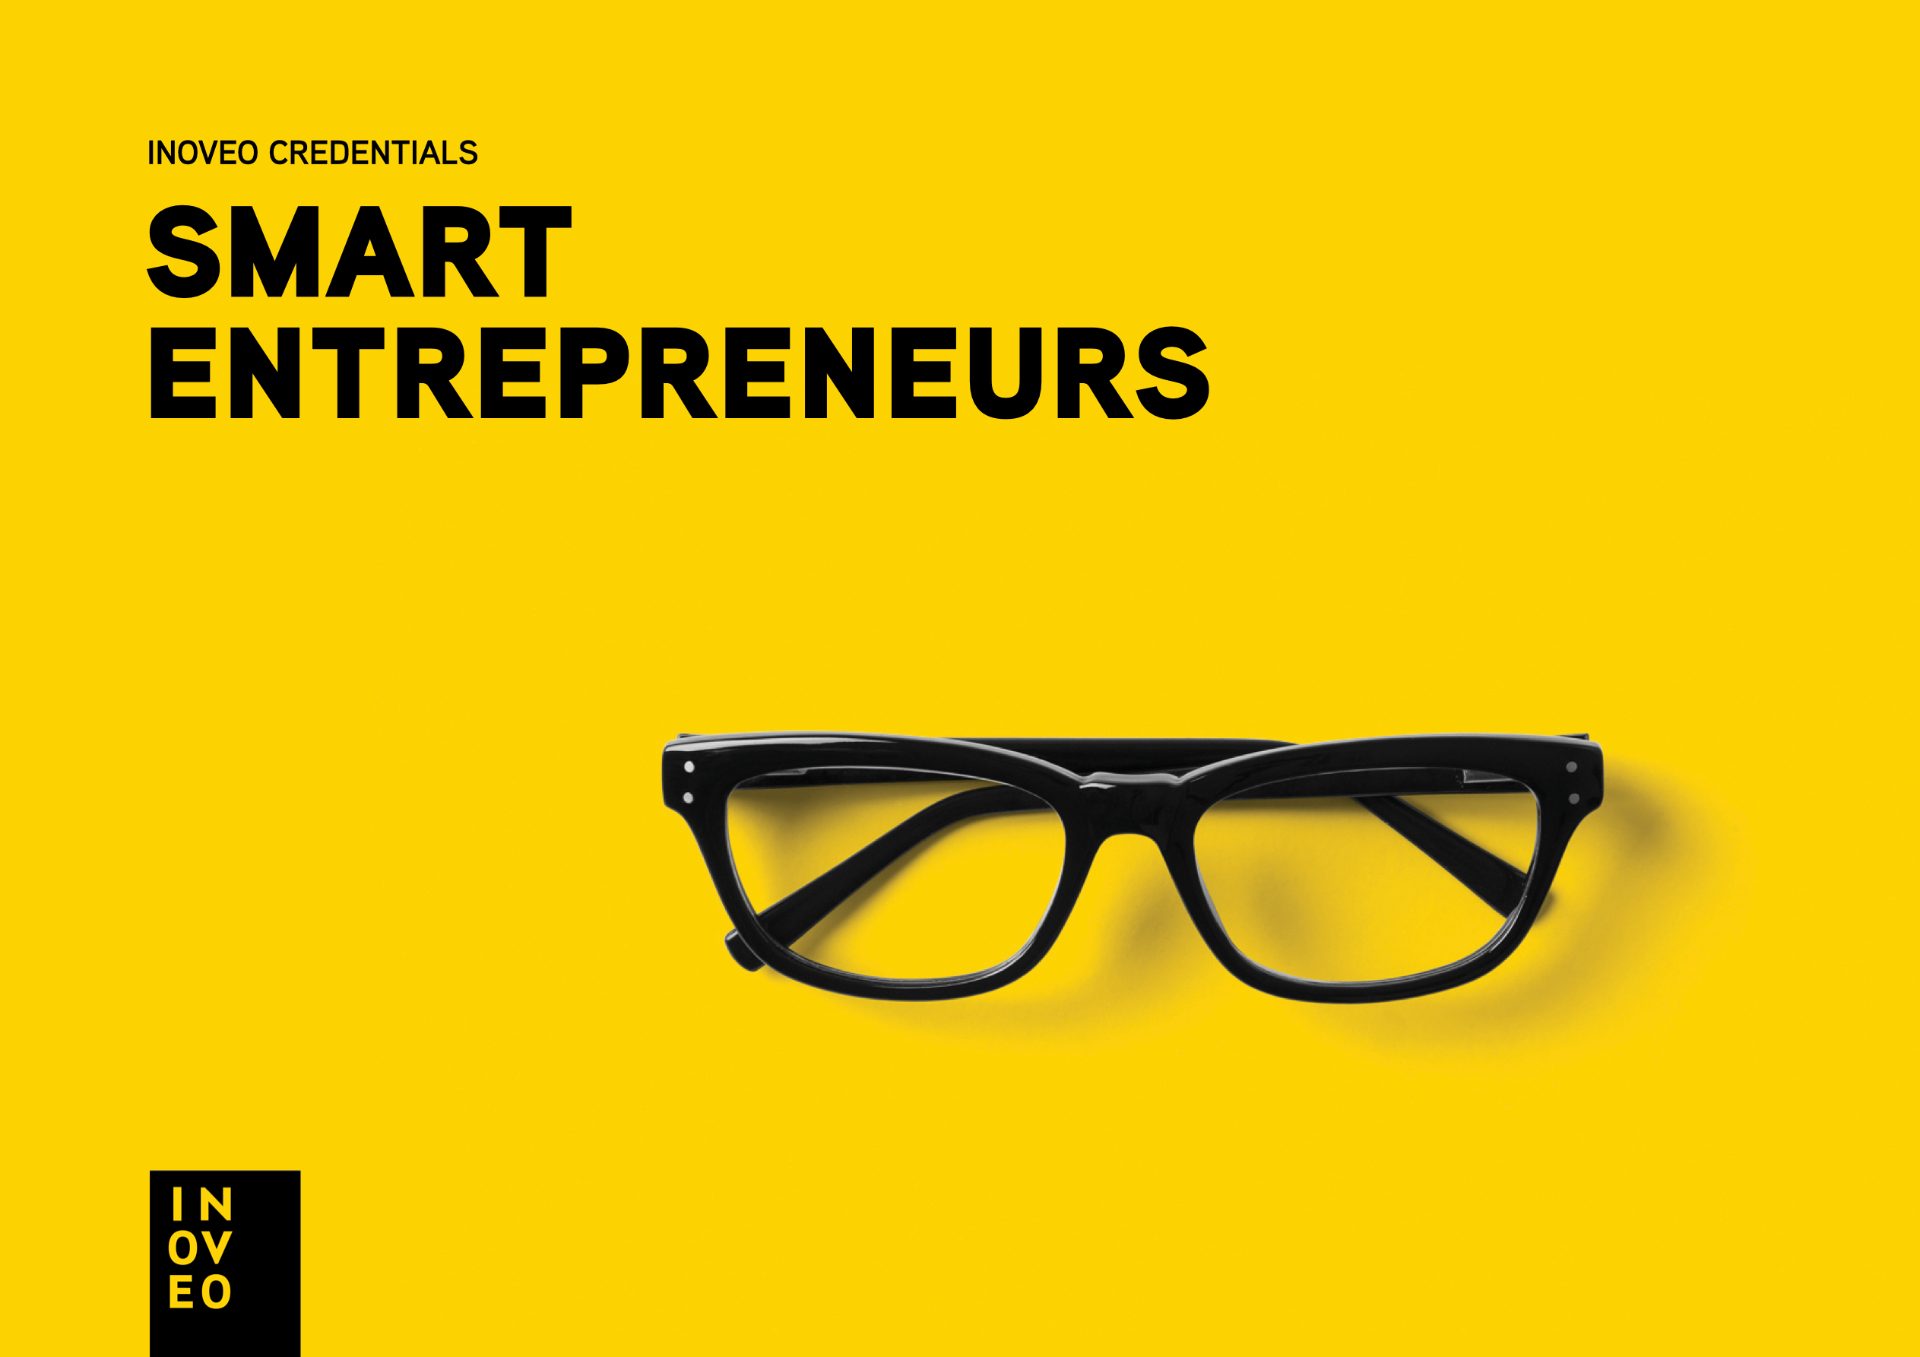 Smart Entrepreneurs Credentials